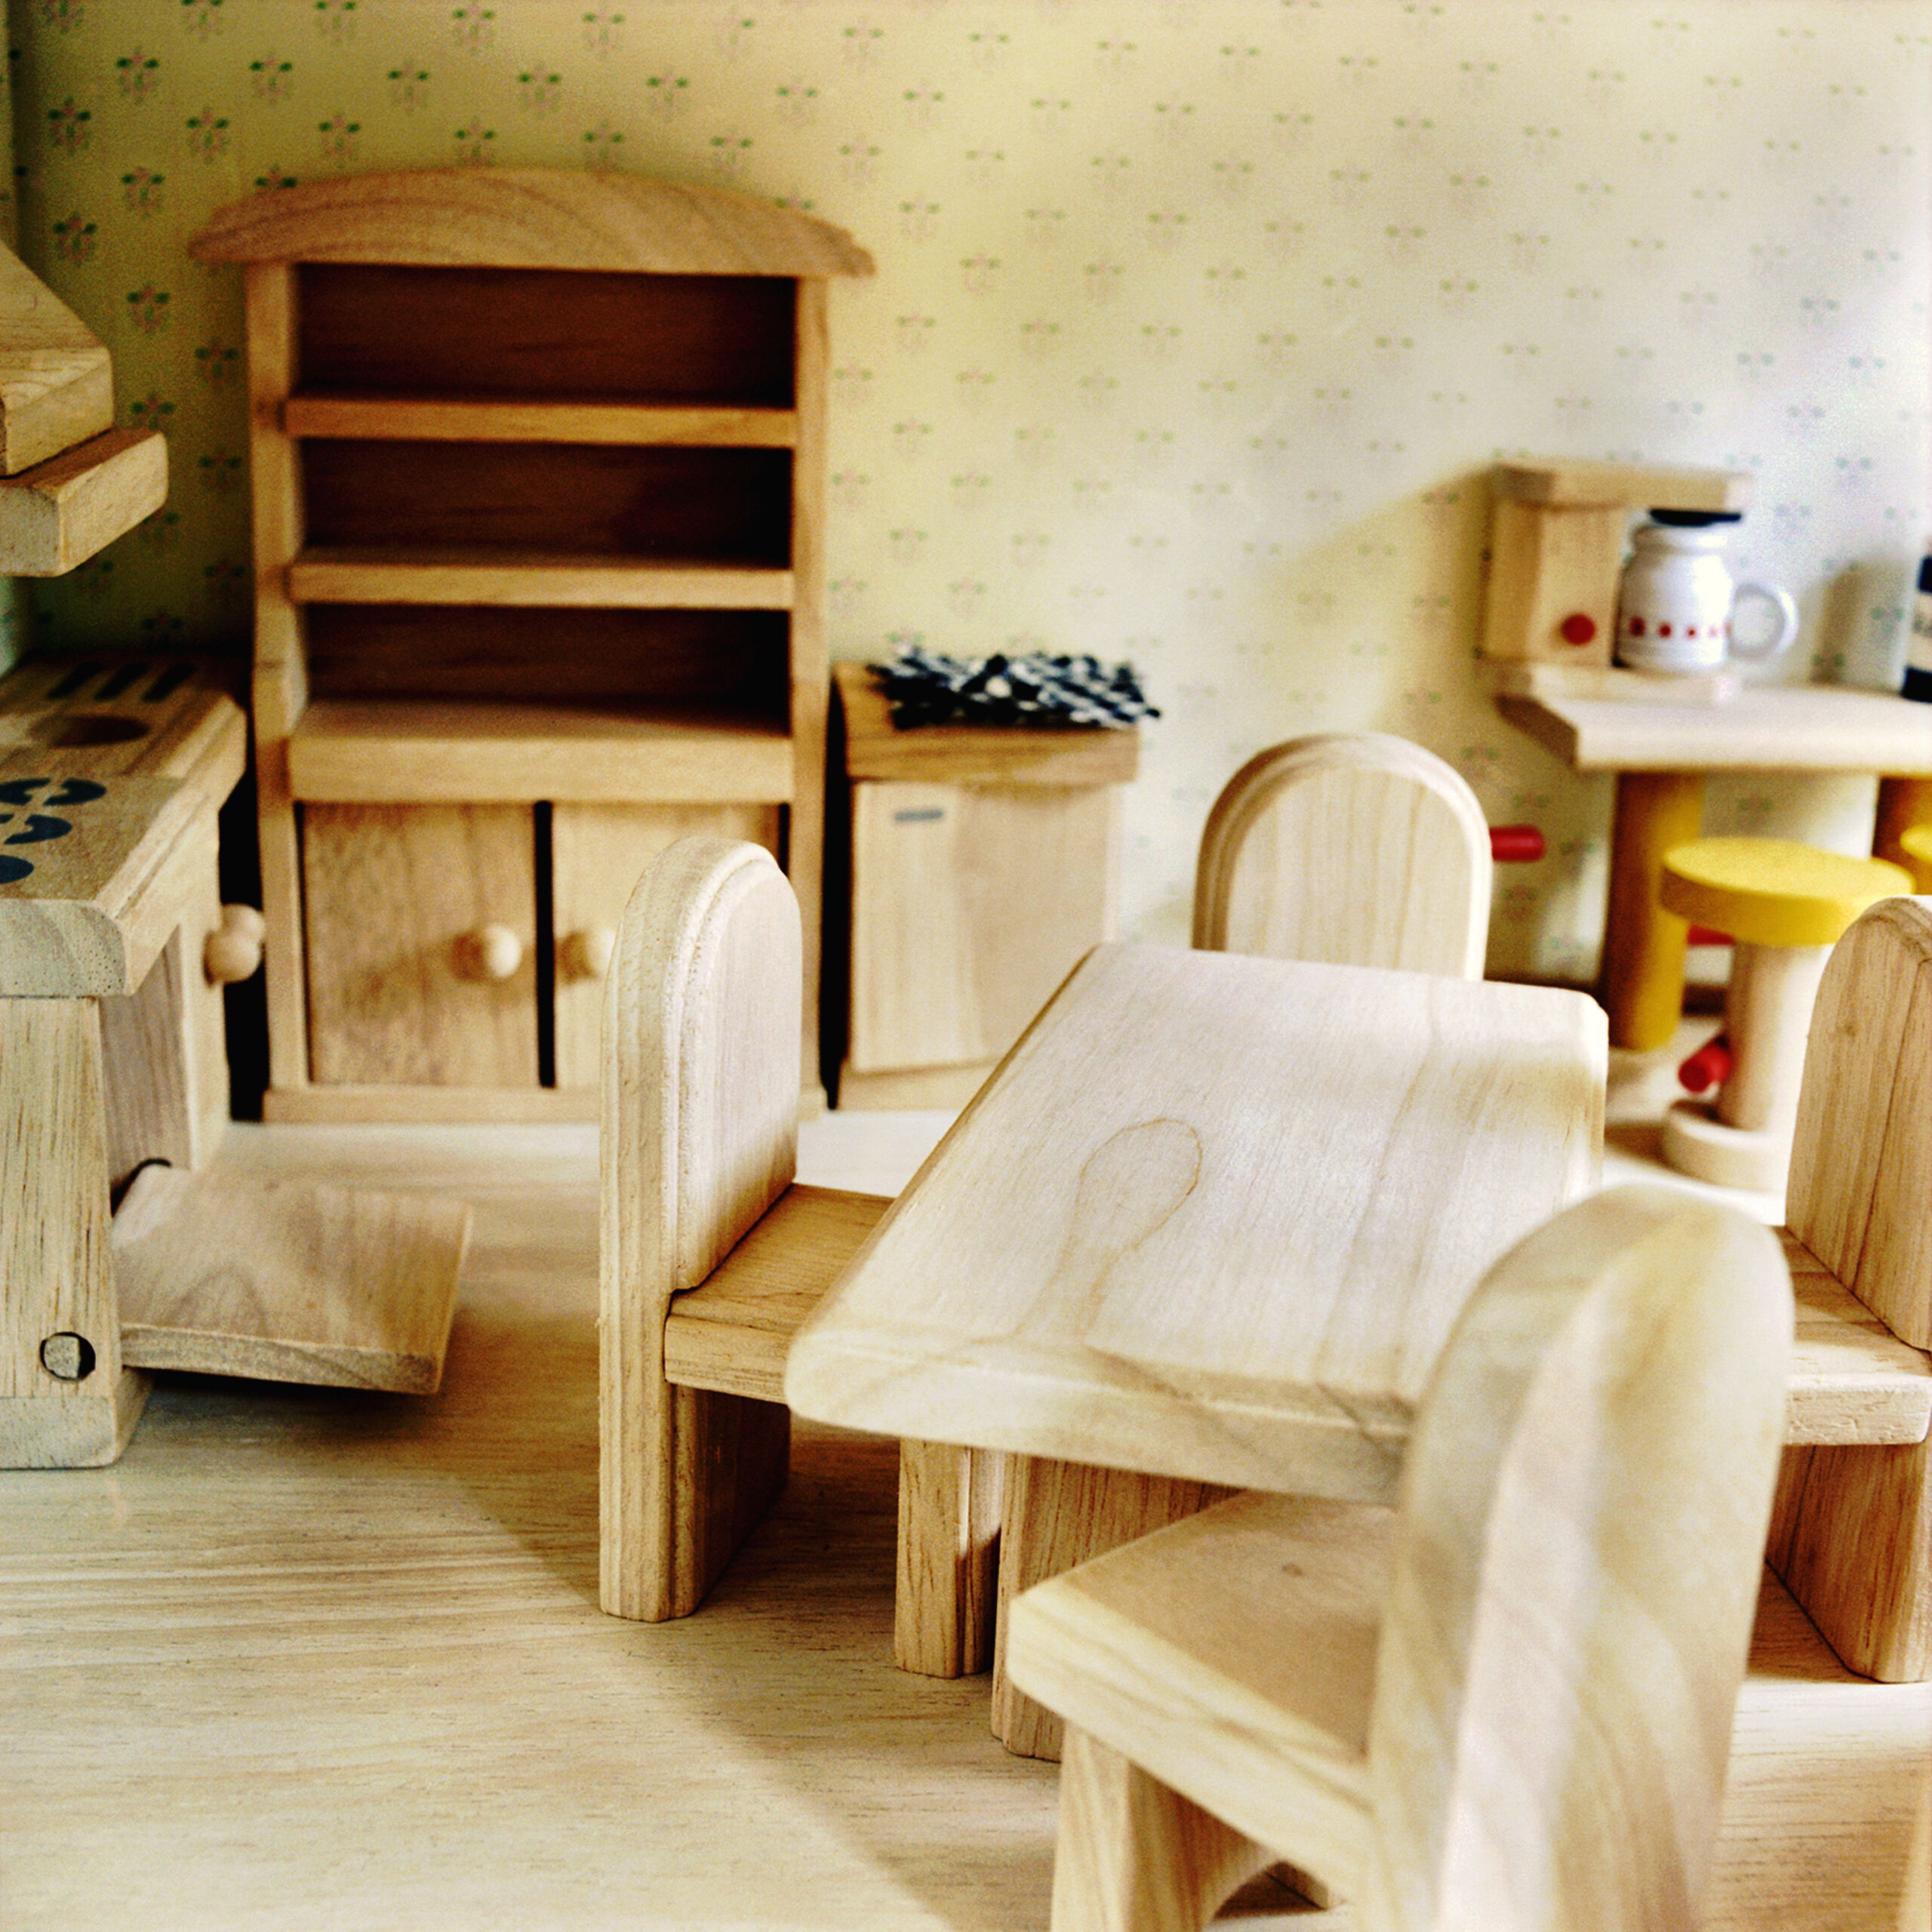 Dollhouse Furniture To Make